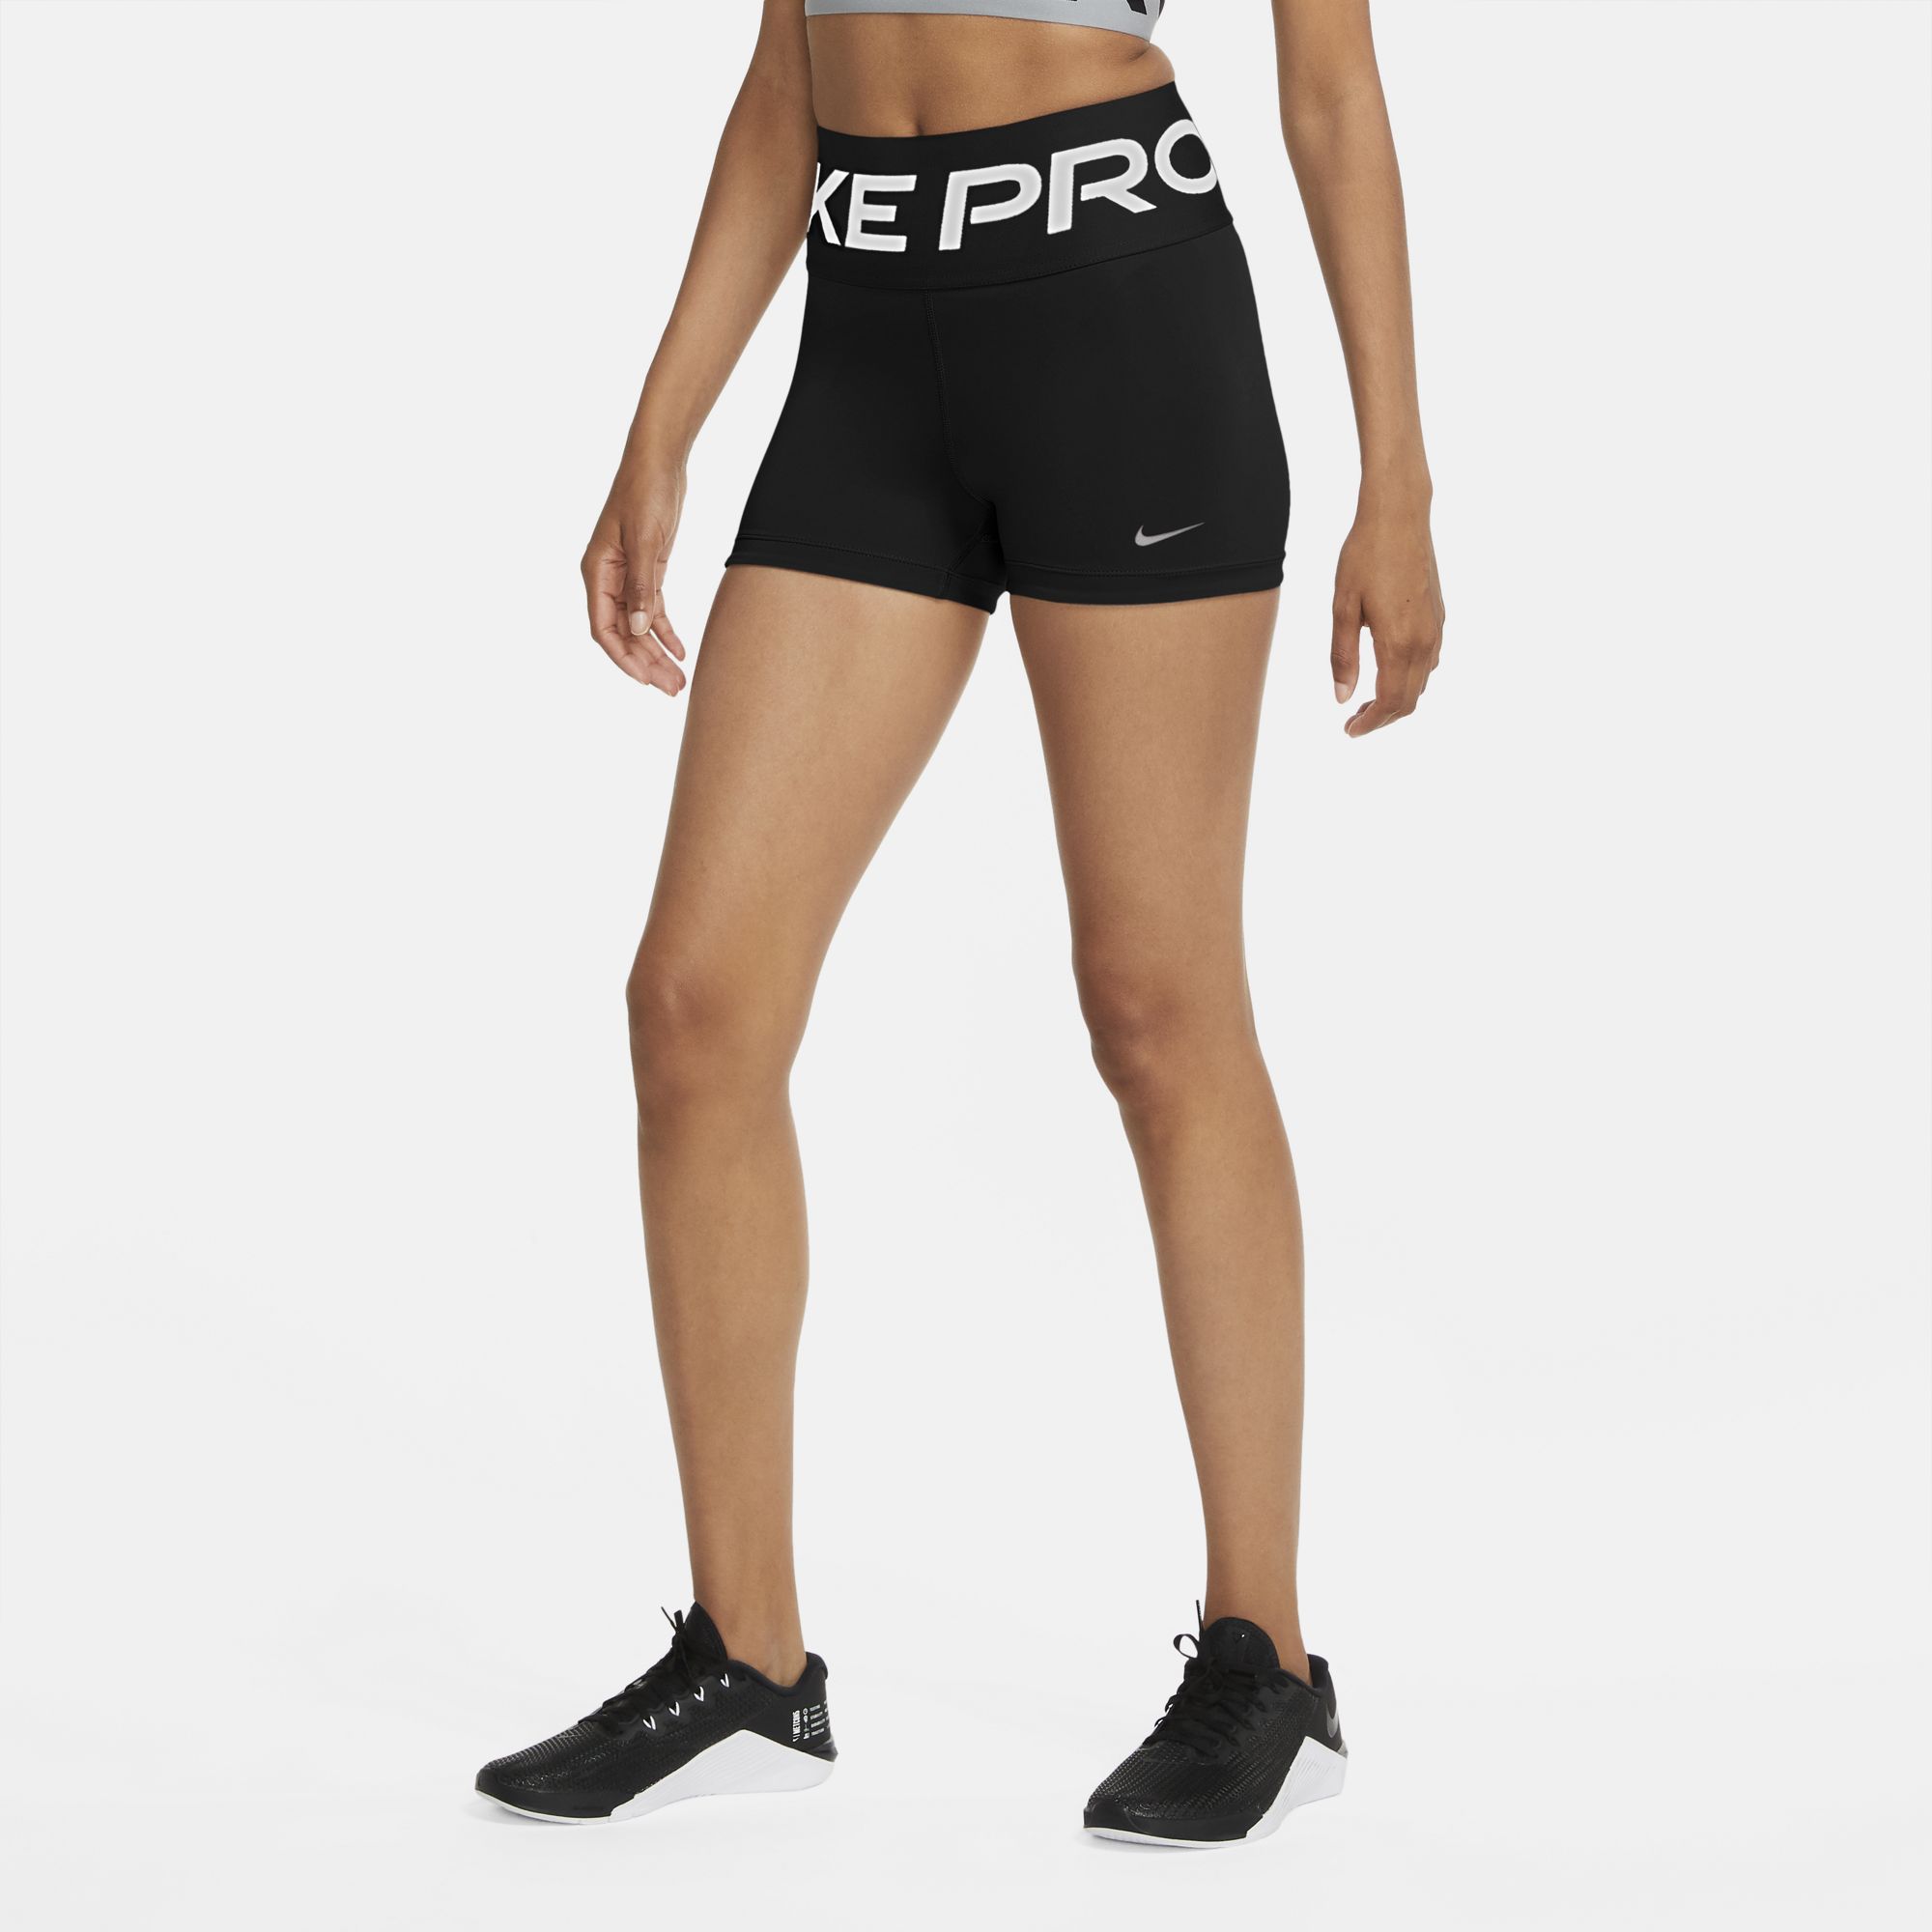 Шорты найк про. Шорты Nike w NKCT FLX Flex short. Шорты найк w NP женские. Nike Pro шорты. Nike Pro booty шорты женские.